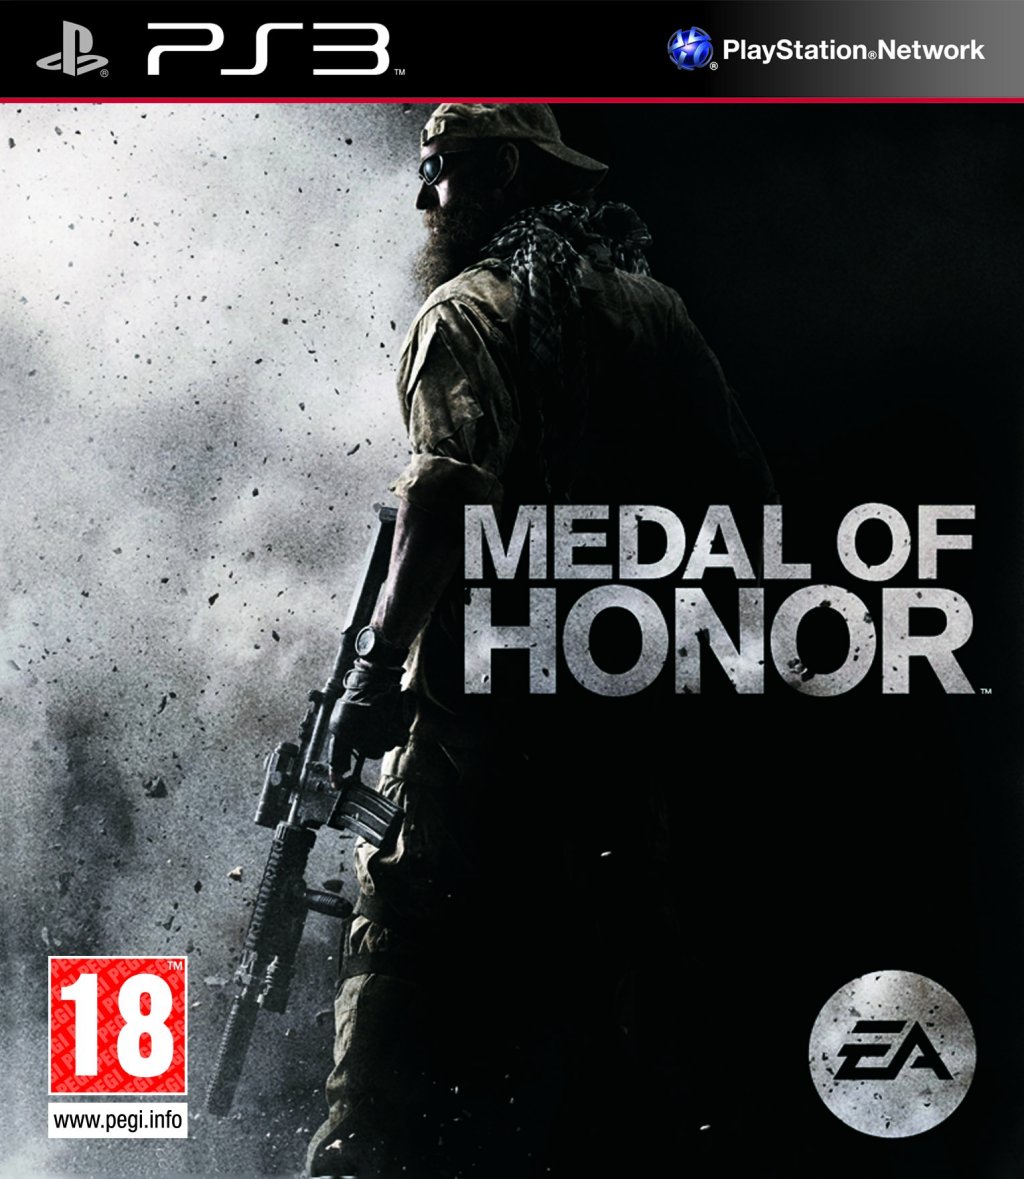 E3 2010 - EA's New Gun Club of Honor